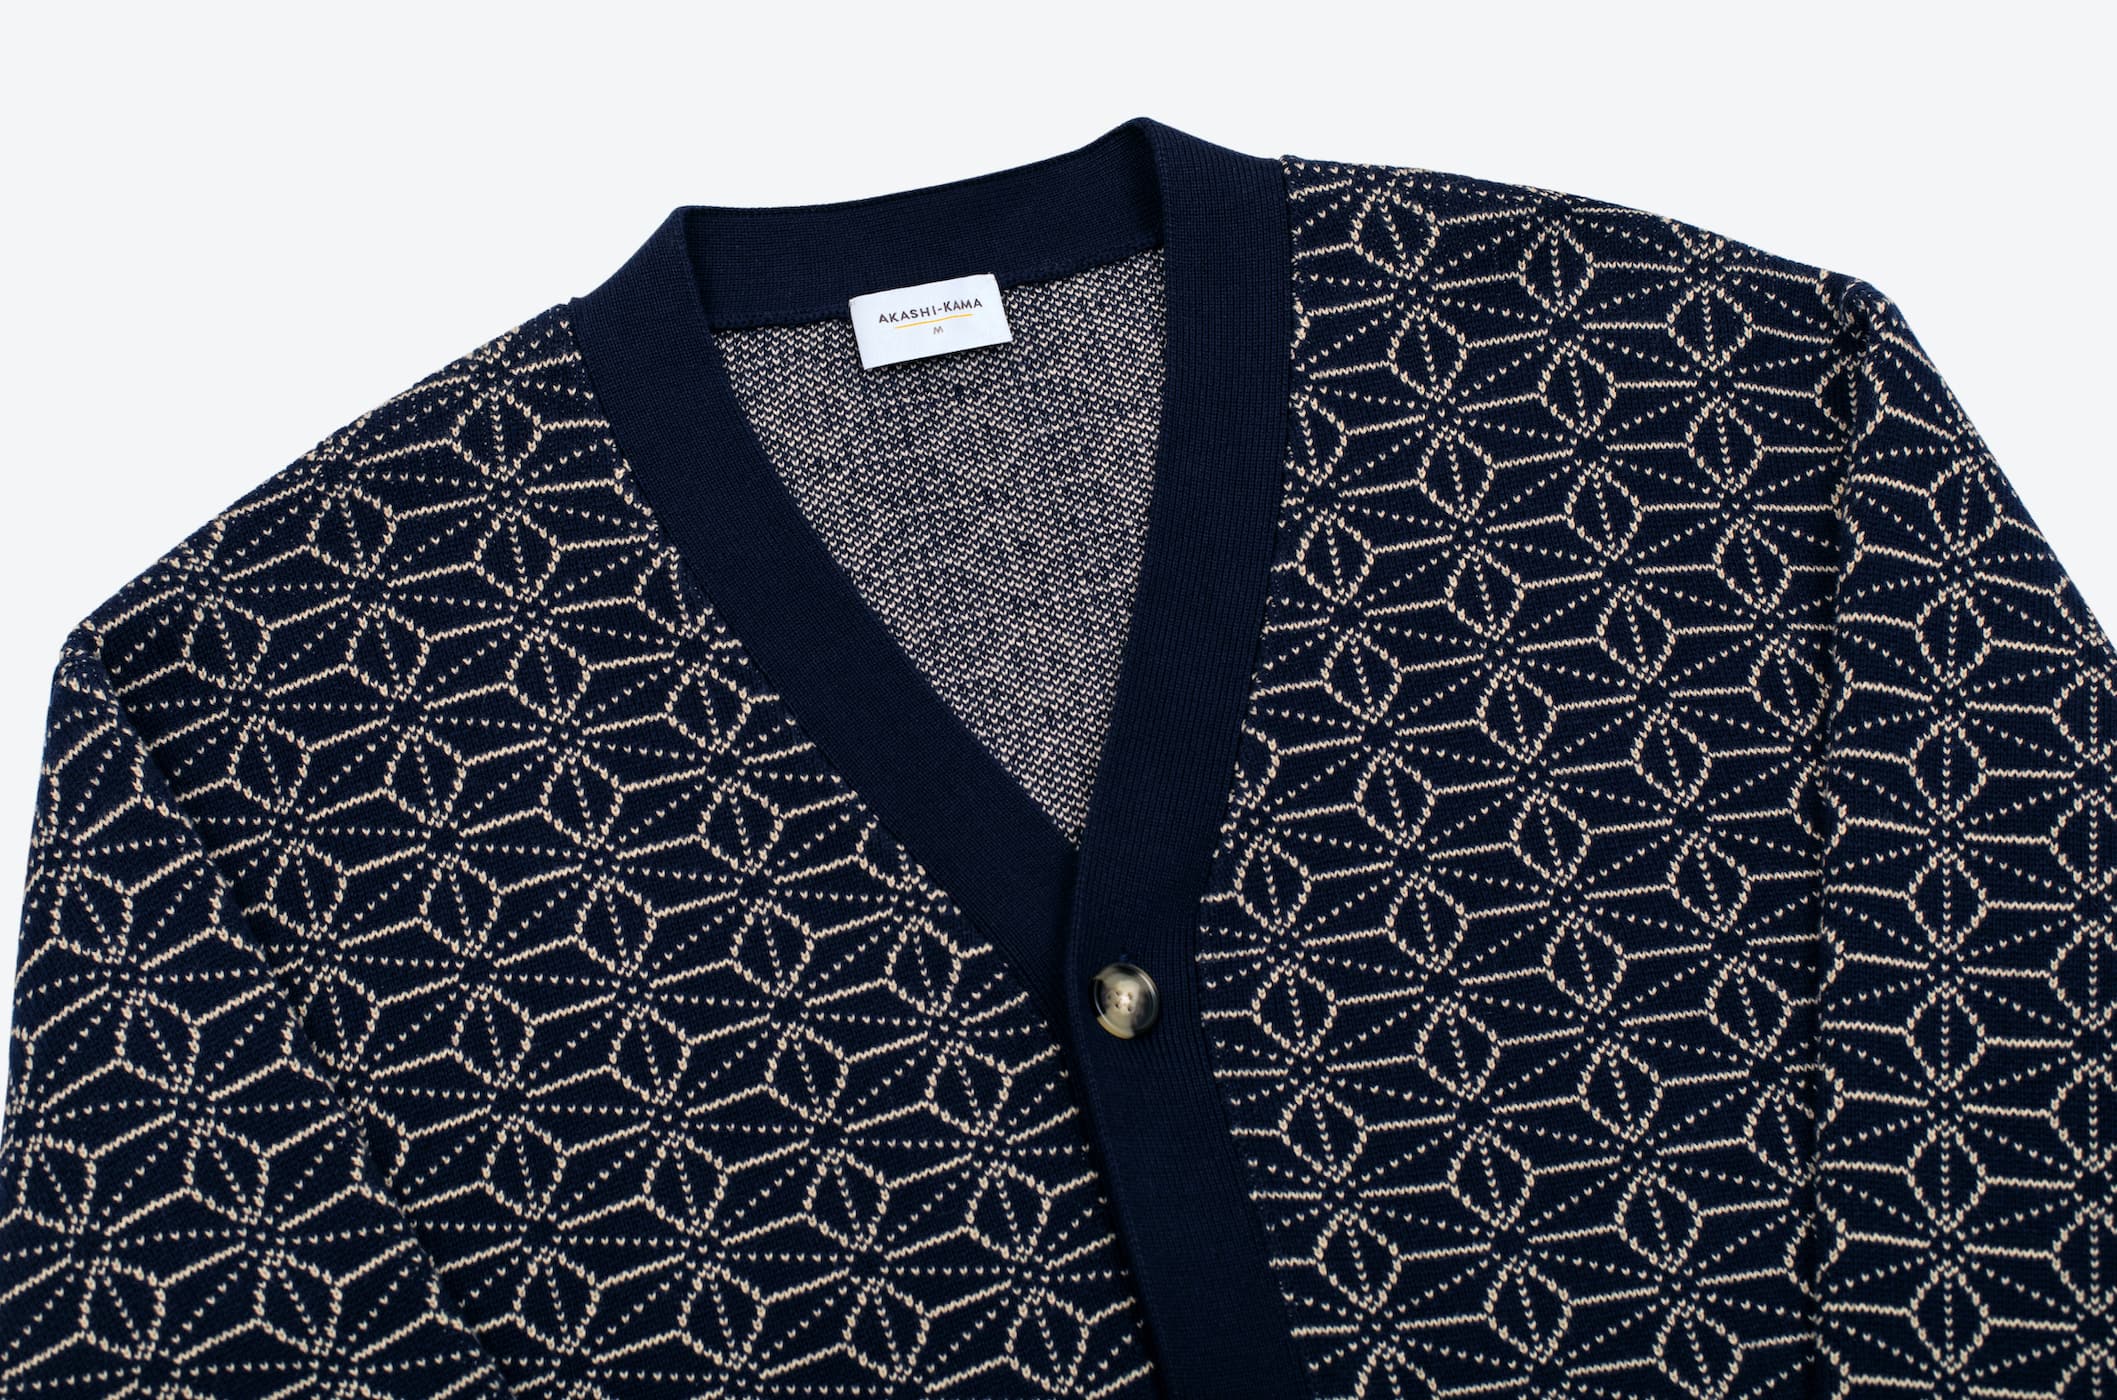 AKASHI-KAMA Japanese Pattern Knitwear | Asanoha Cardigan Indigo Sweater